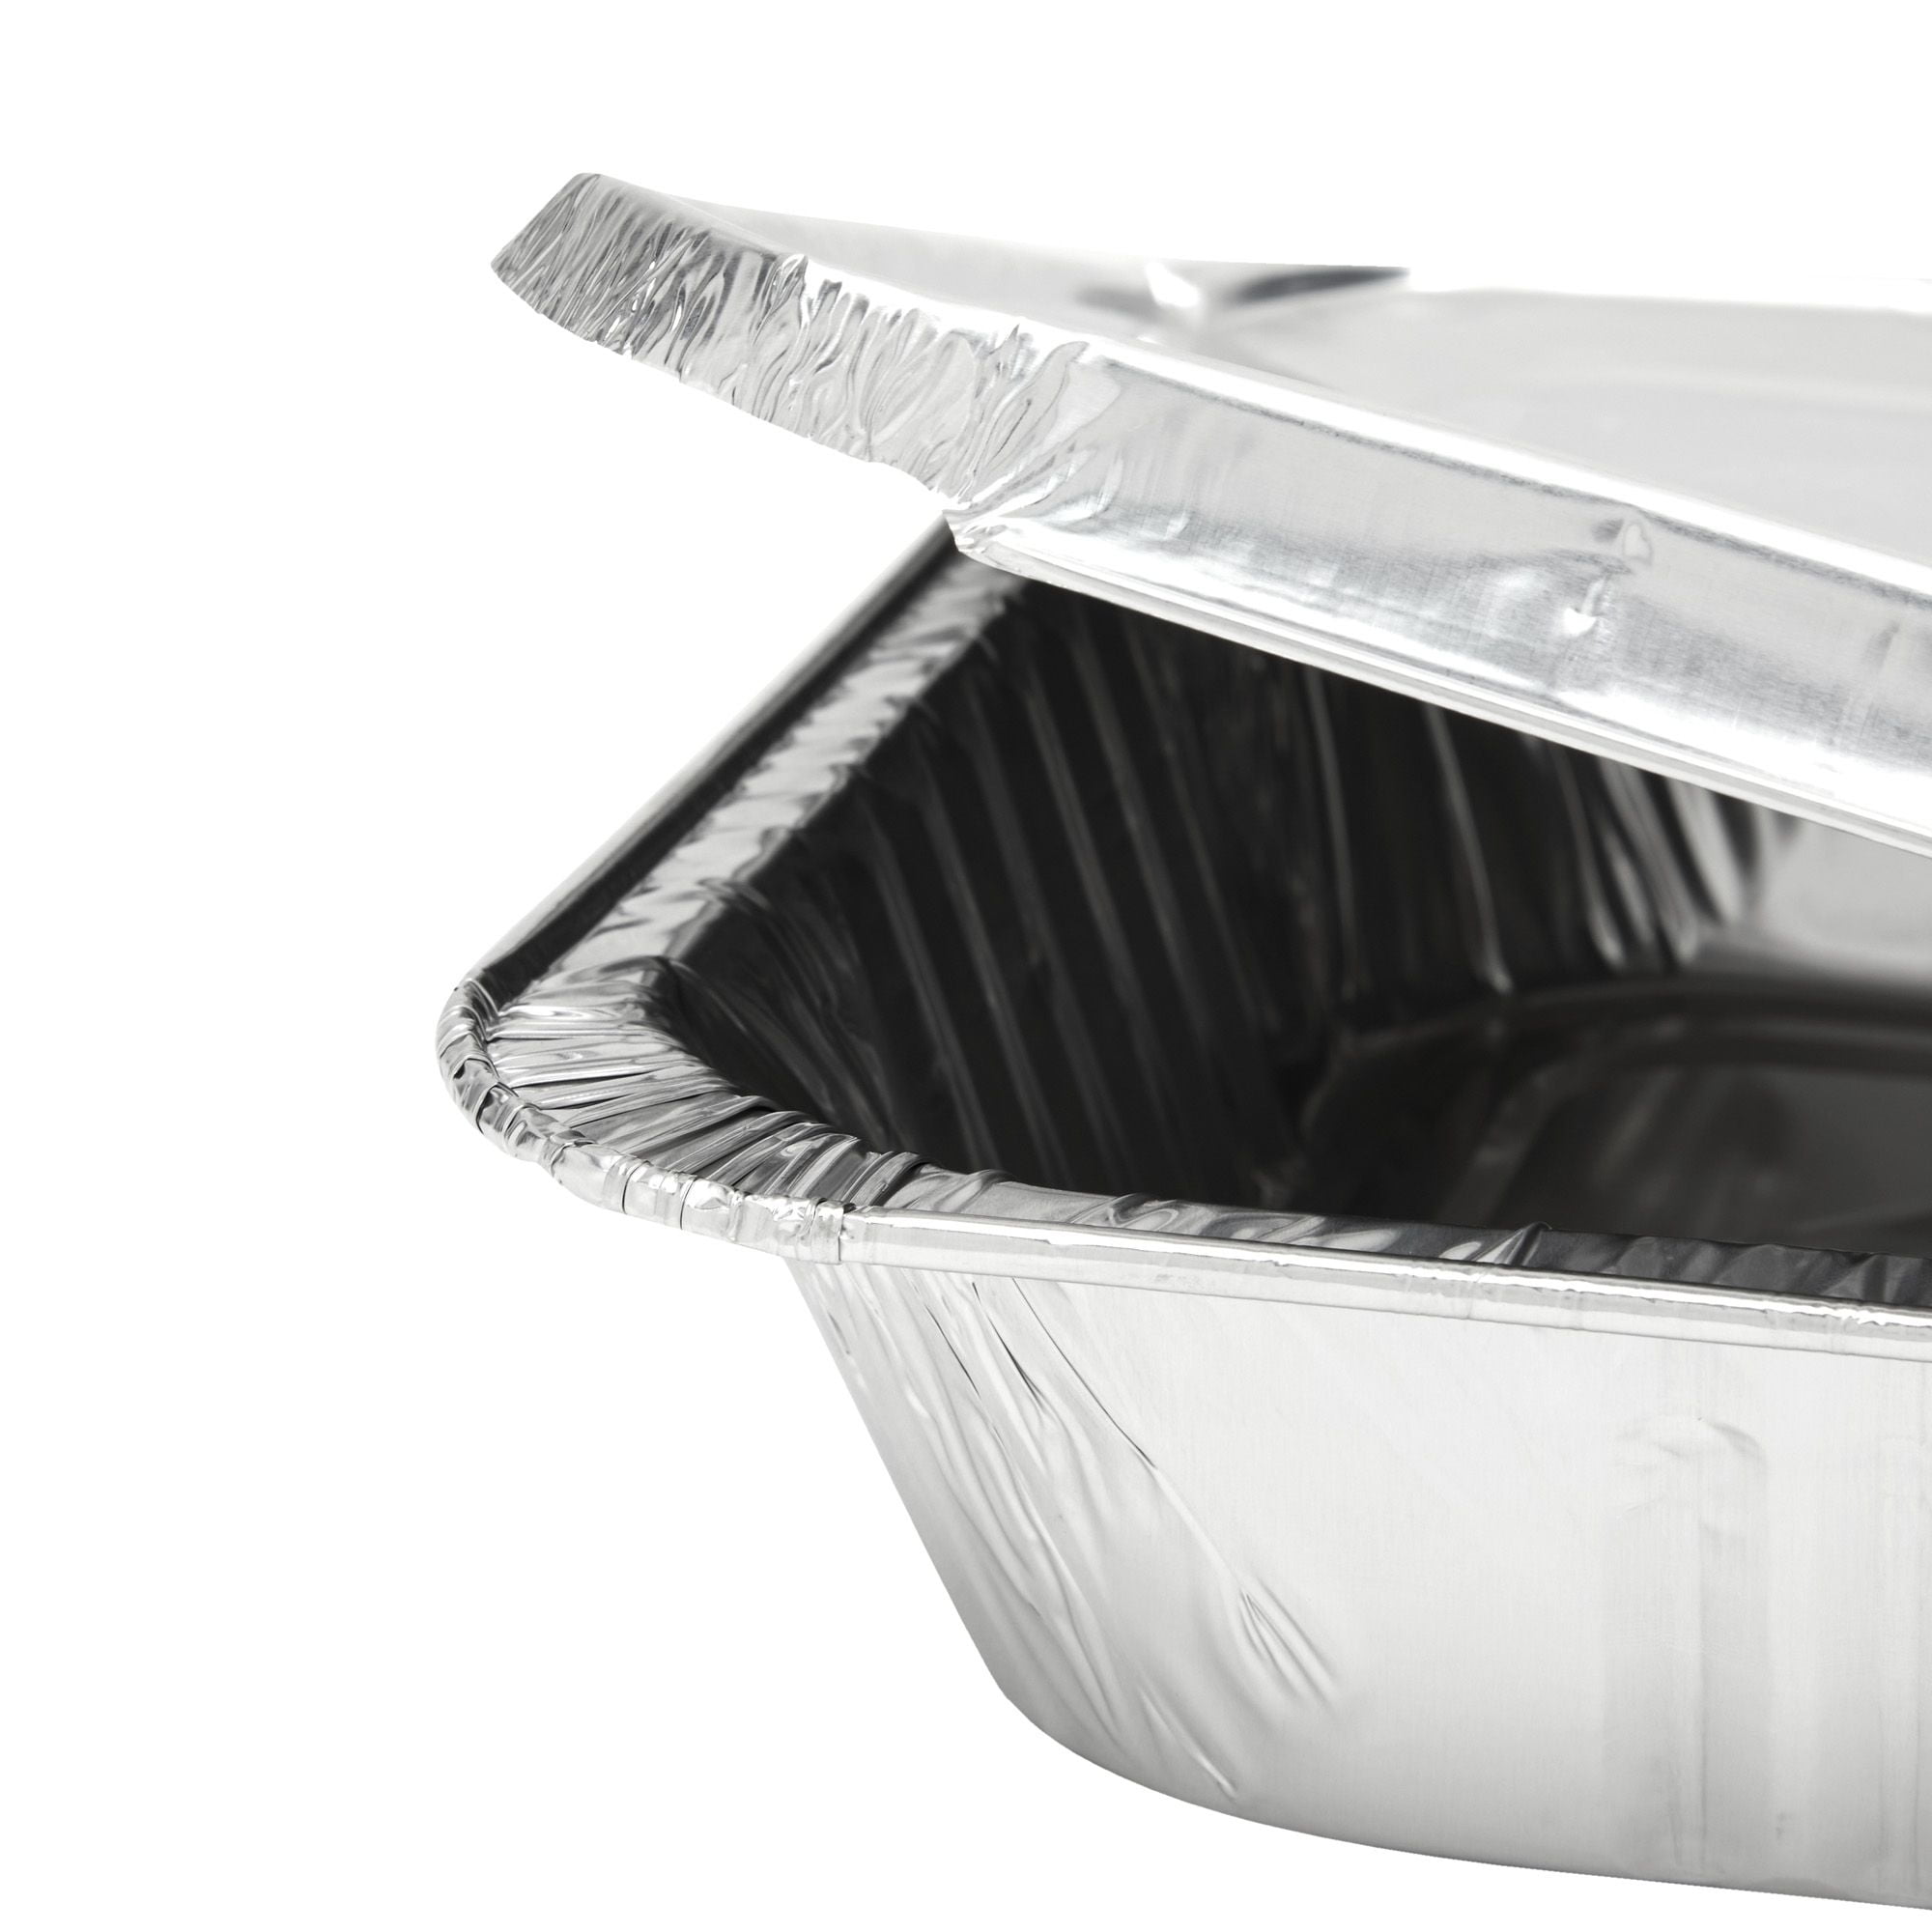 Half Size Aluminum Foil Pans: In Bulk at WebstaurantStore